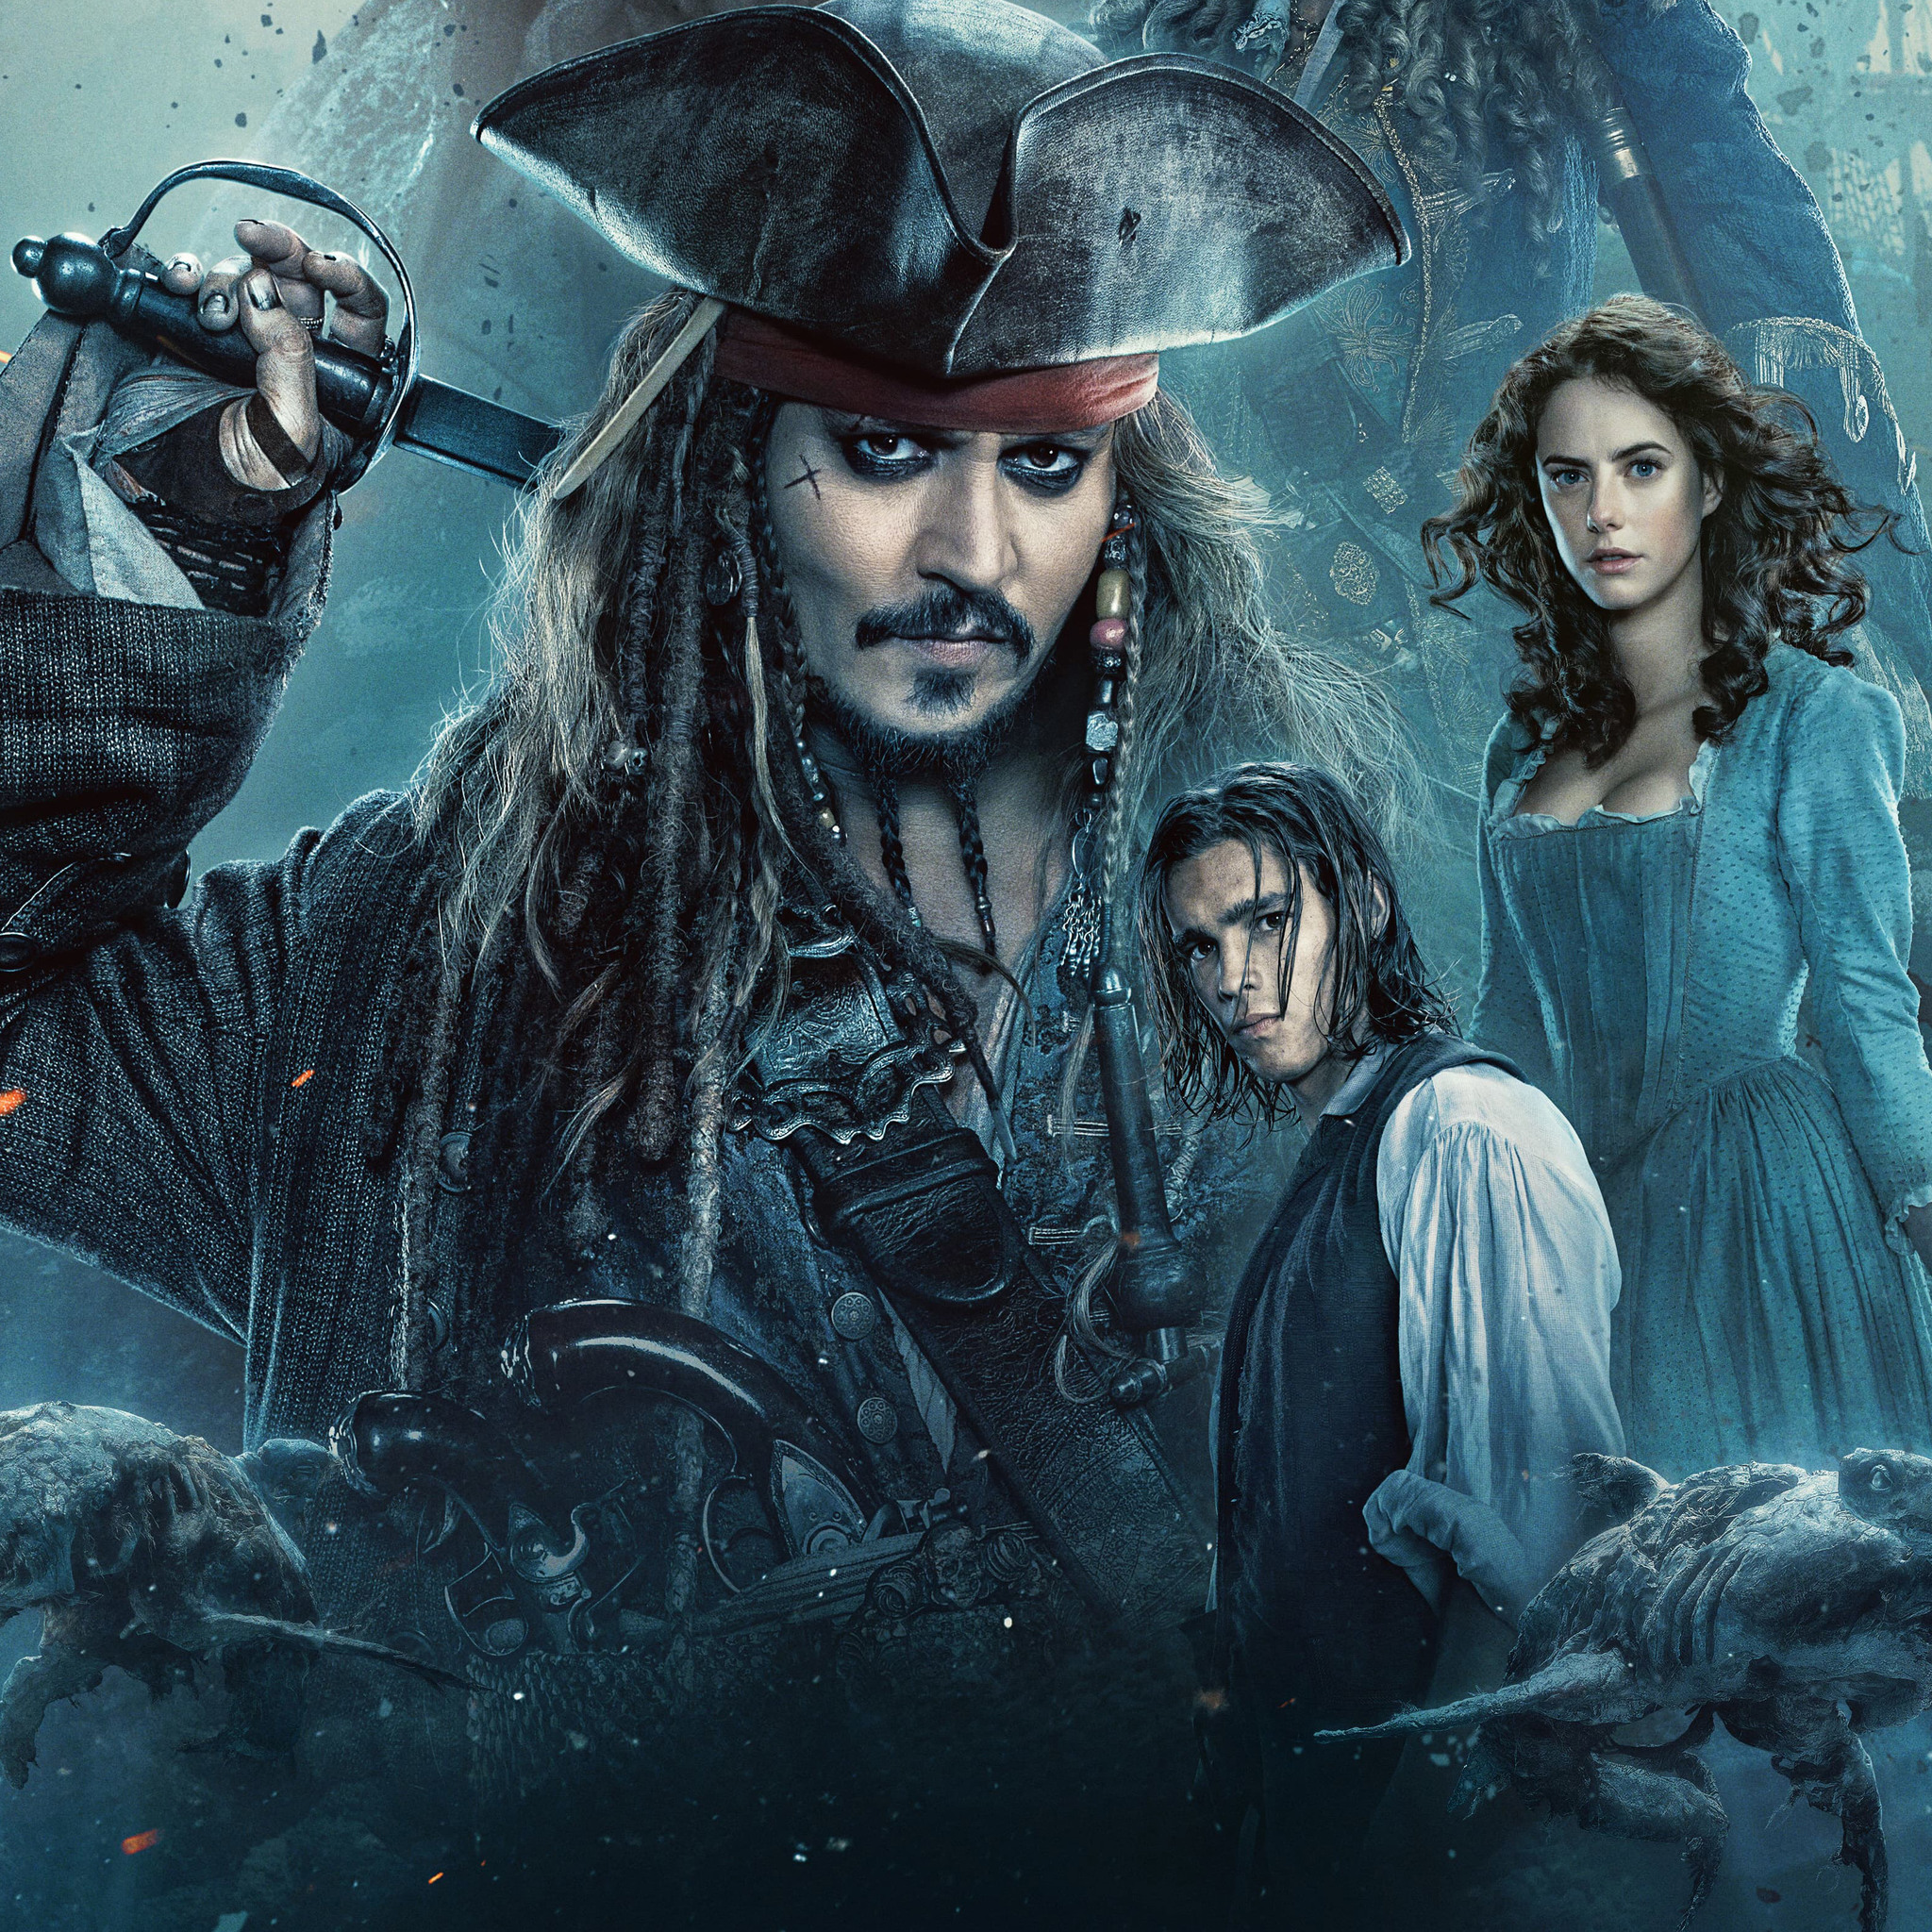 pirates 2005 full movie free download